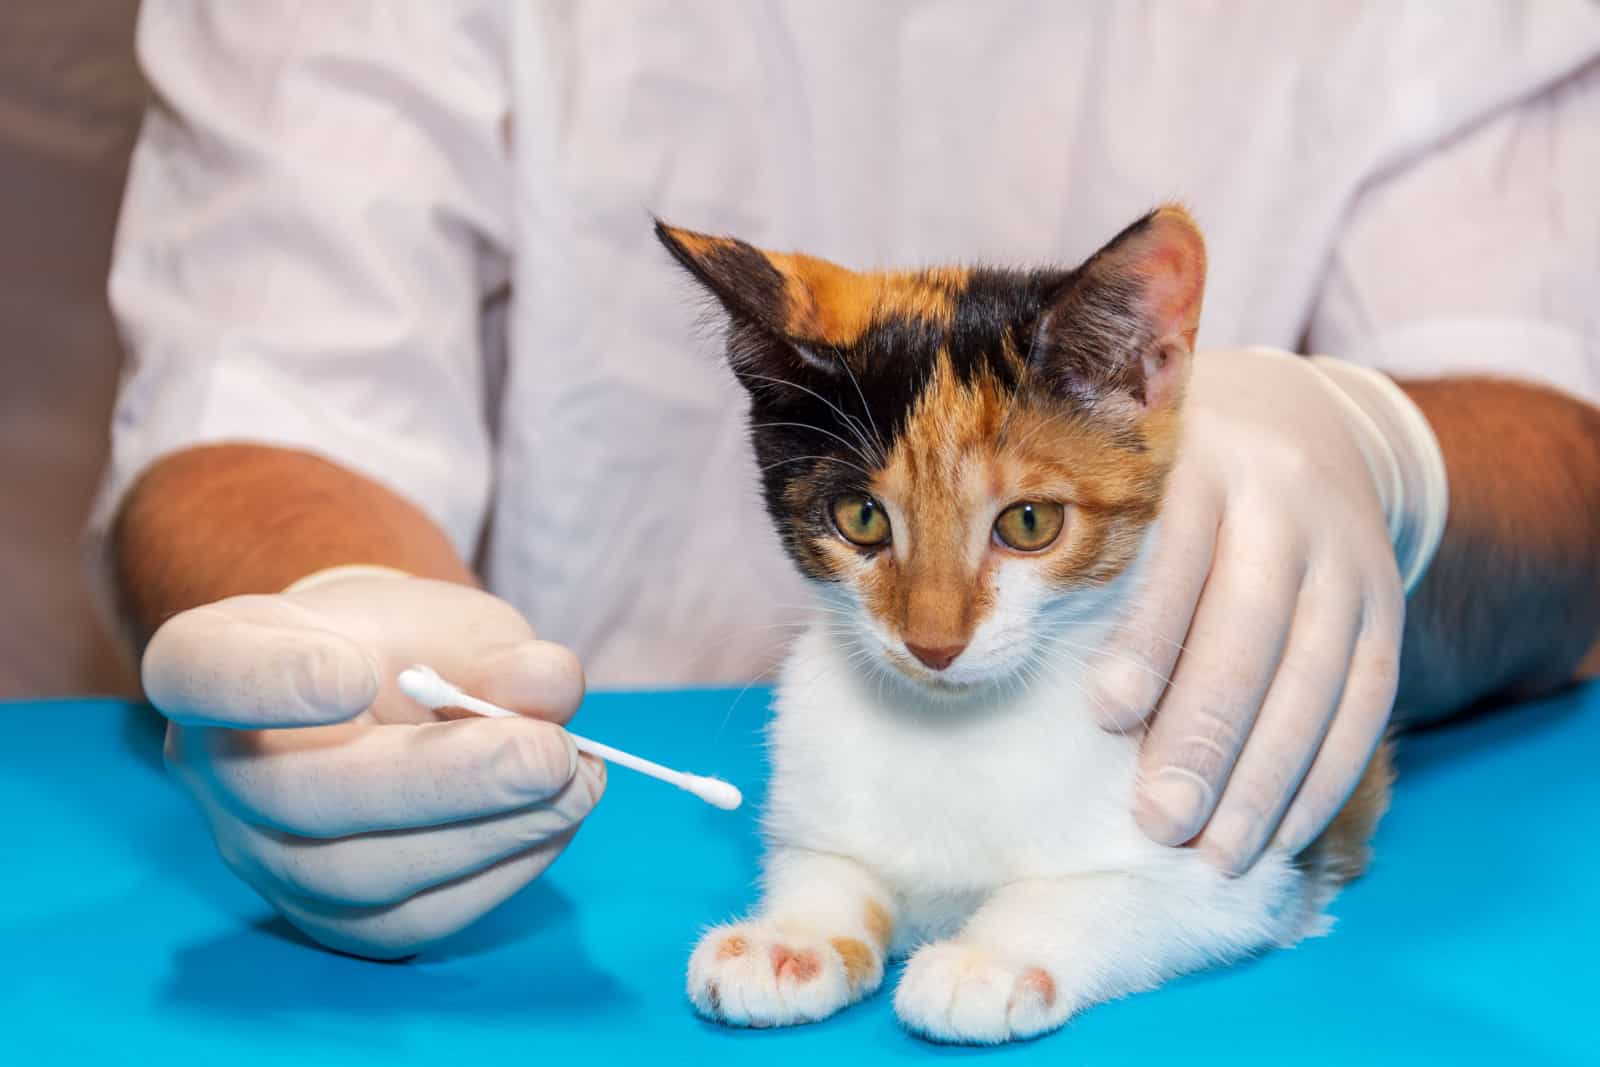 vet applies ointment on a cat